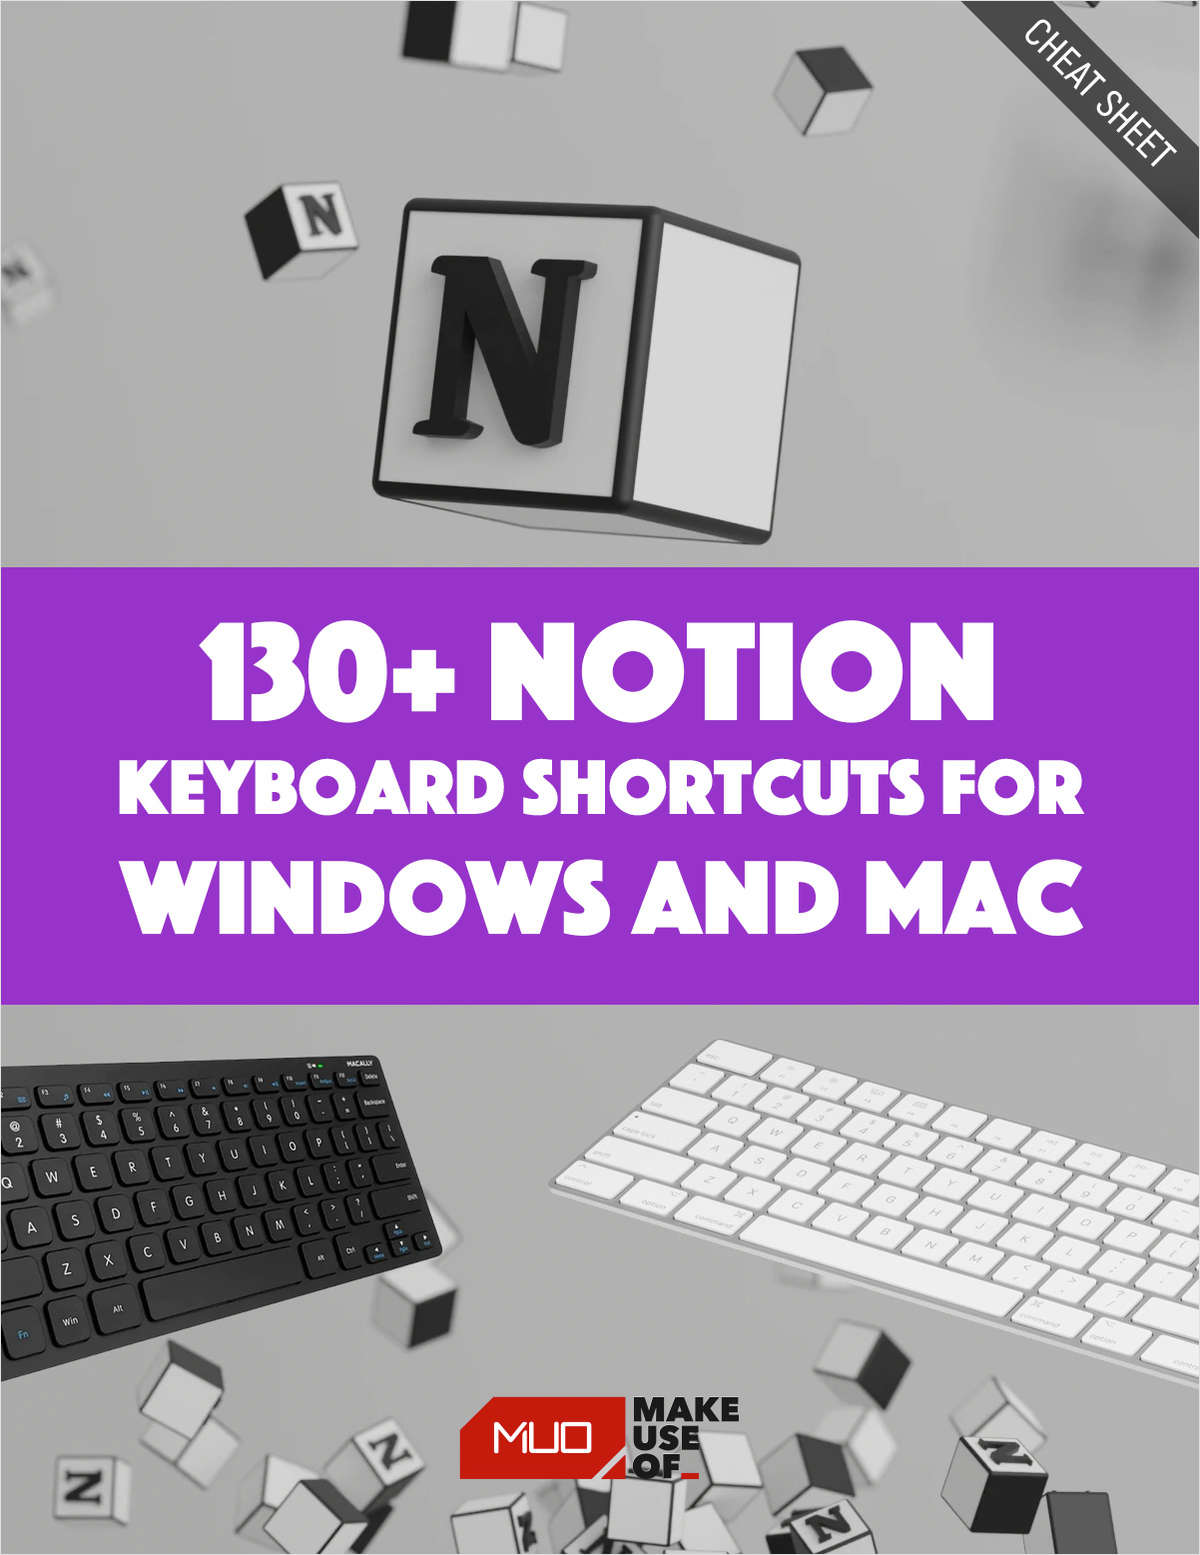 130+ Notion Keyboard Shortcuts for Windows and Mac (Free Cheat Sheet)